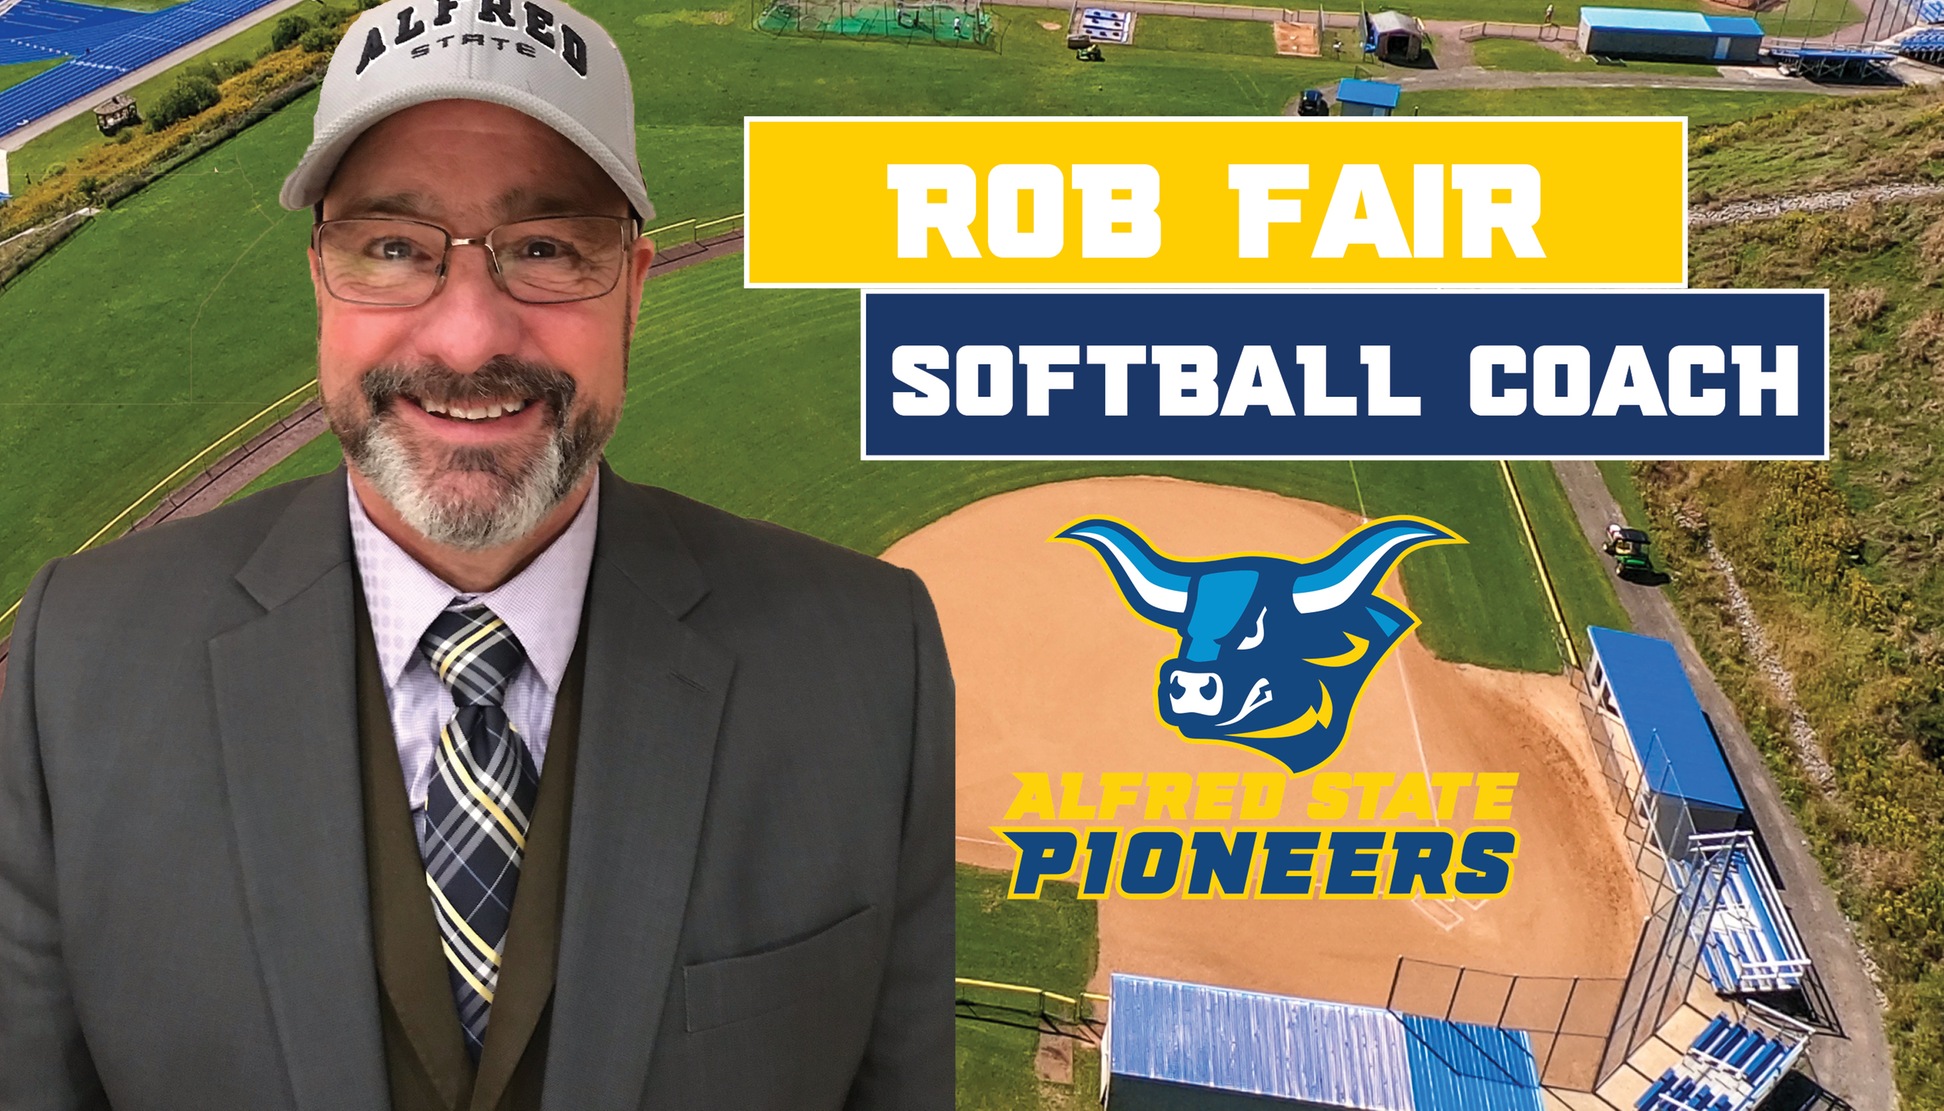 Rob Fair named softball coach